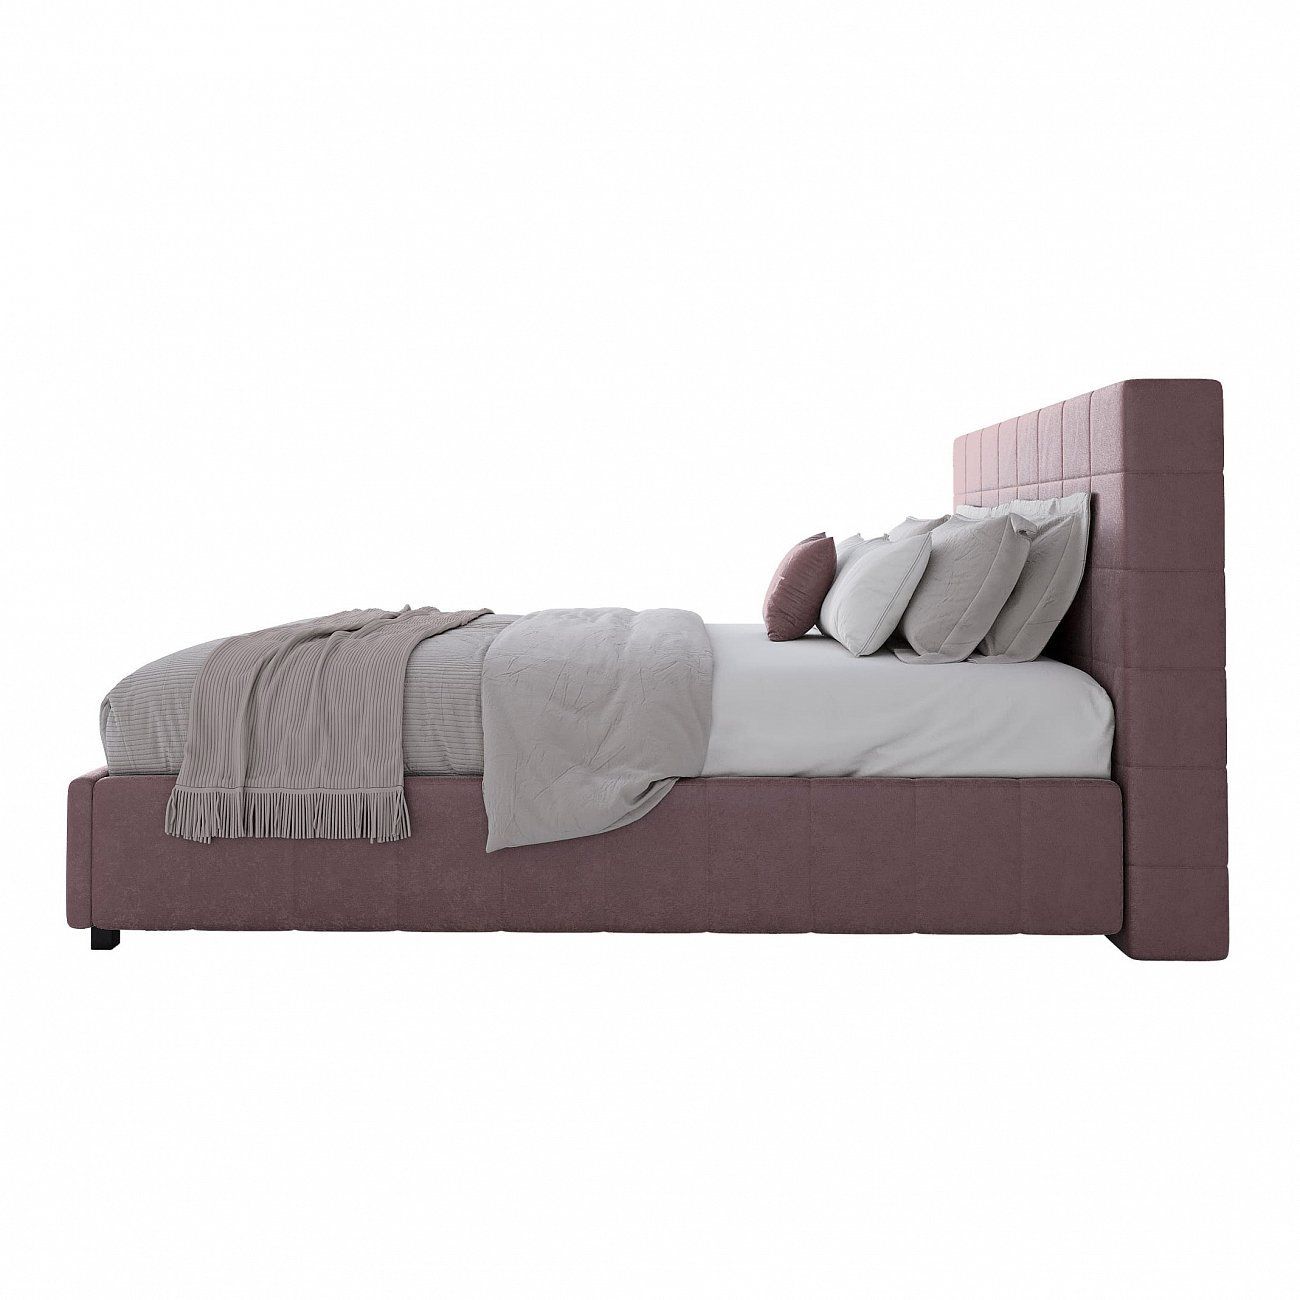 Double bed 160x200 cm dusty Rose Shining Modern